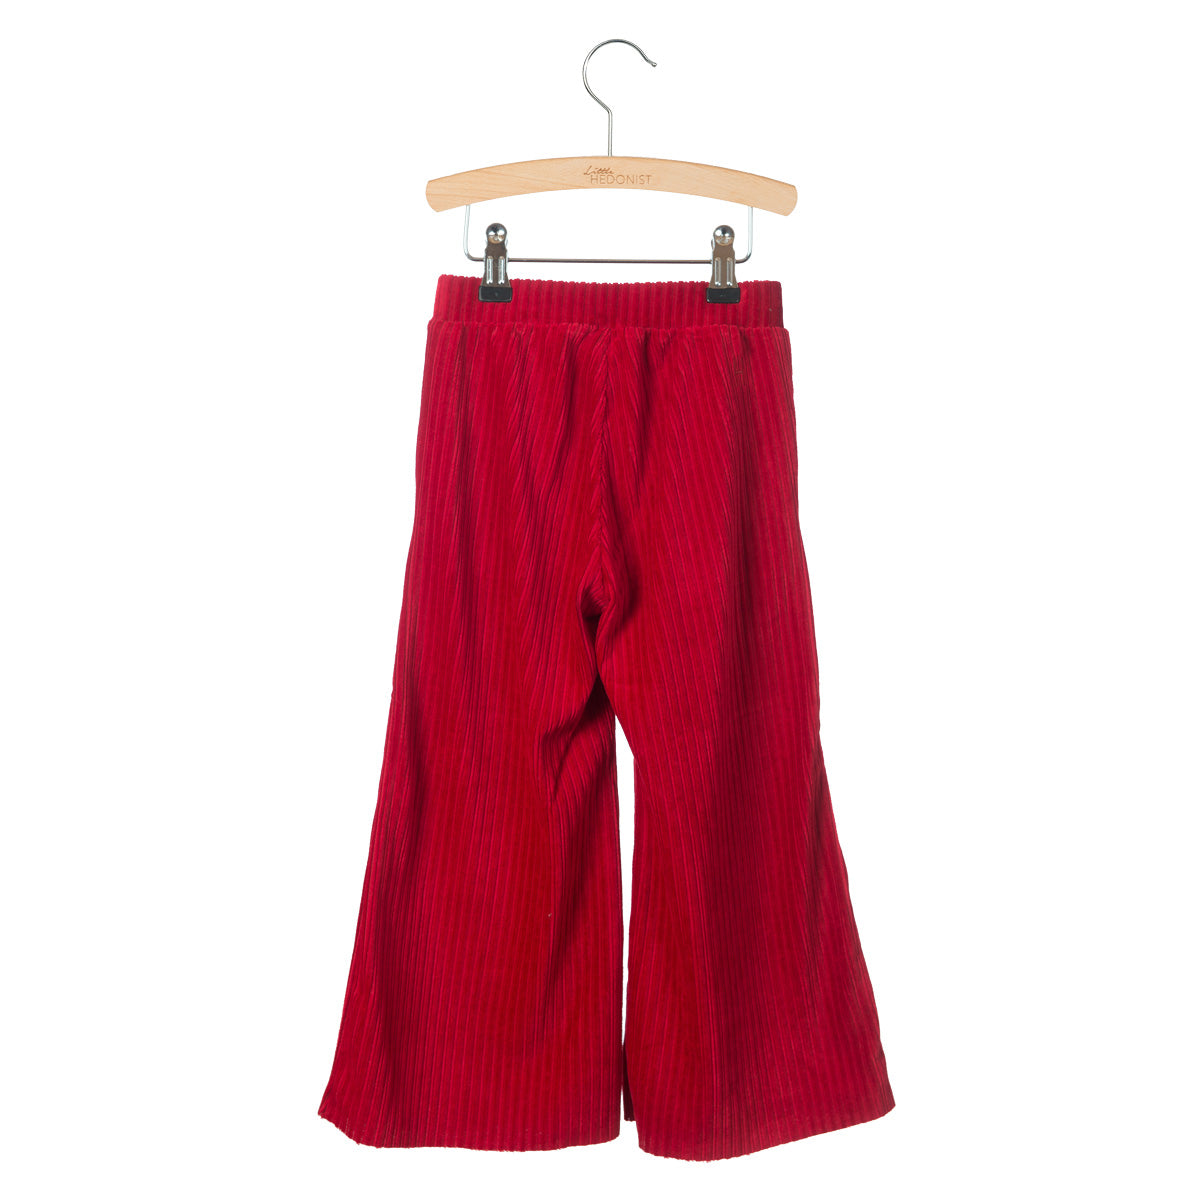 LITTLE HEDONIST -  Pantalon large confortable rouge neuf - 10 ans